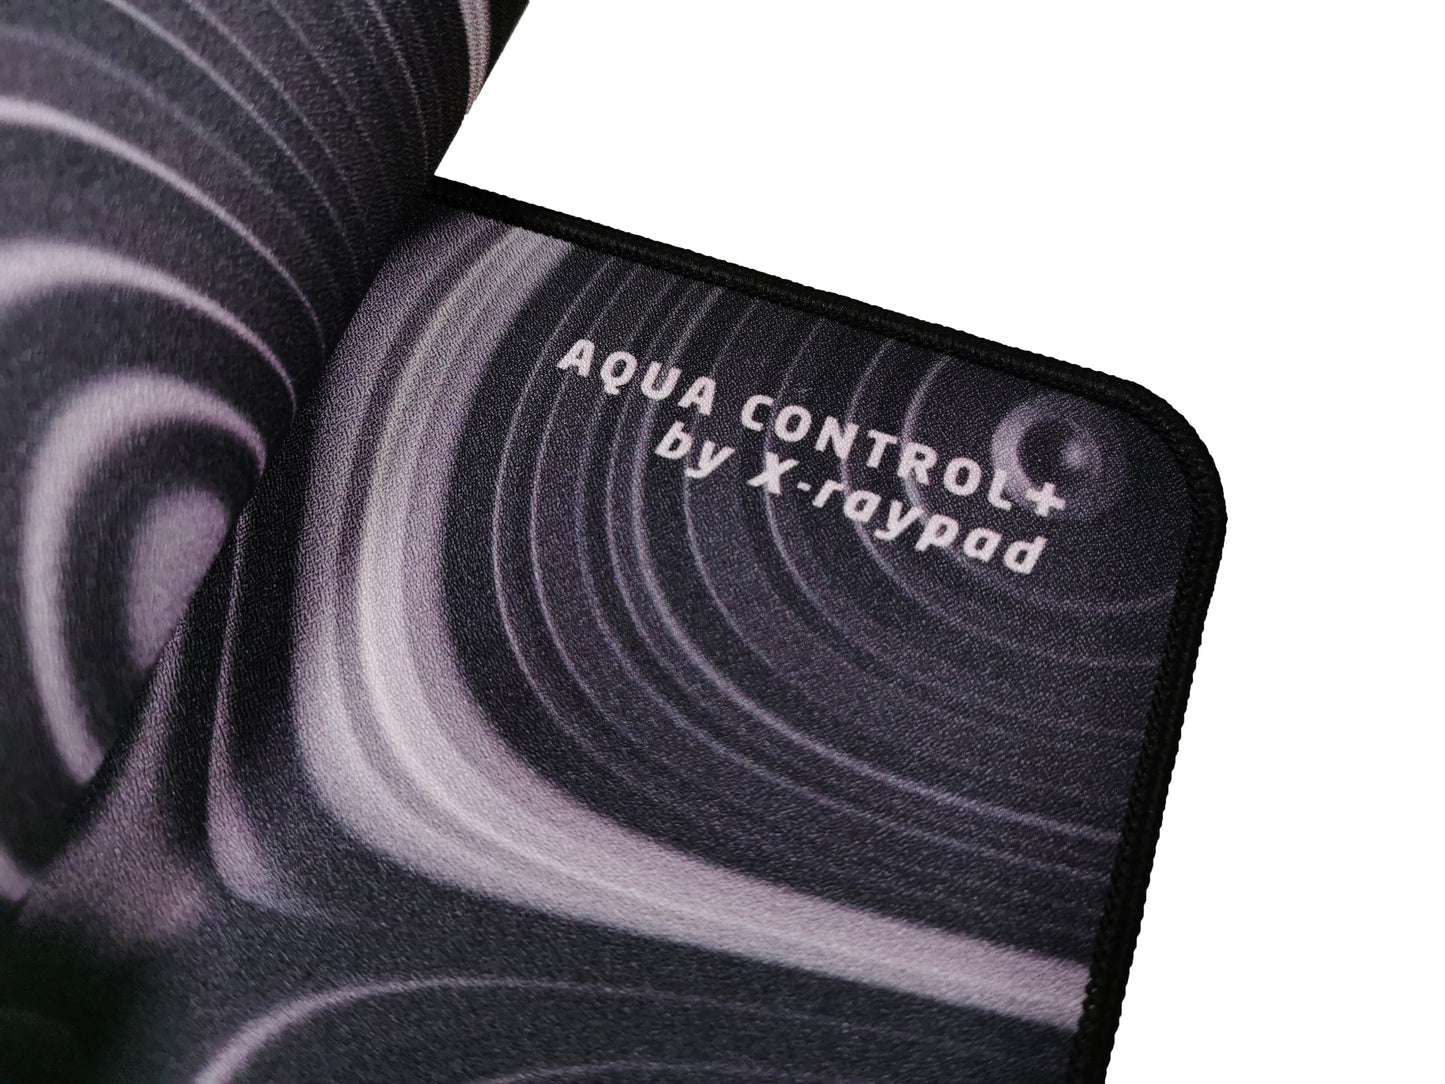 X-Raypad Aqua Control Plus Gaming Mouse Pad - Black and Grey Strata